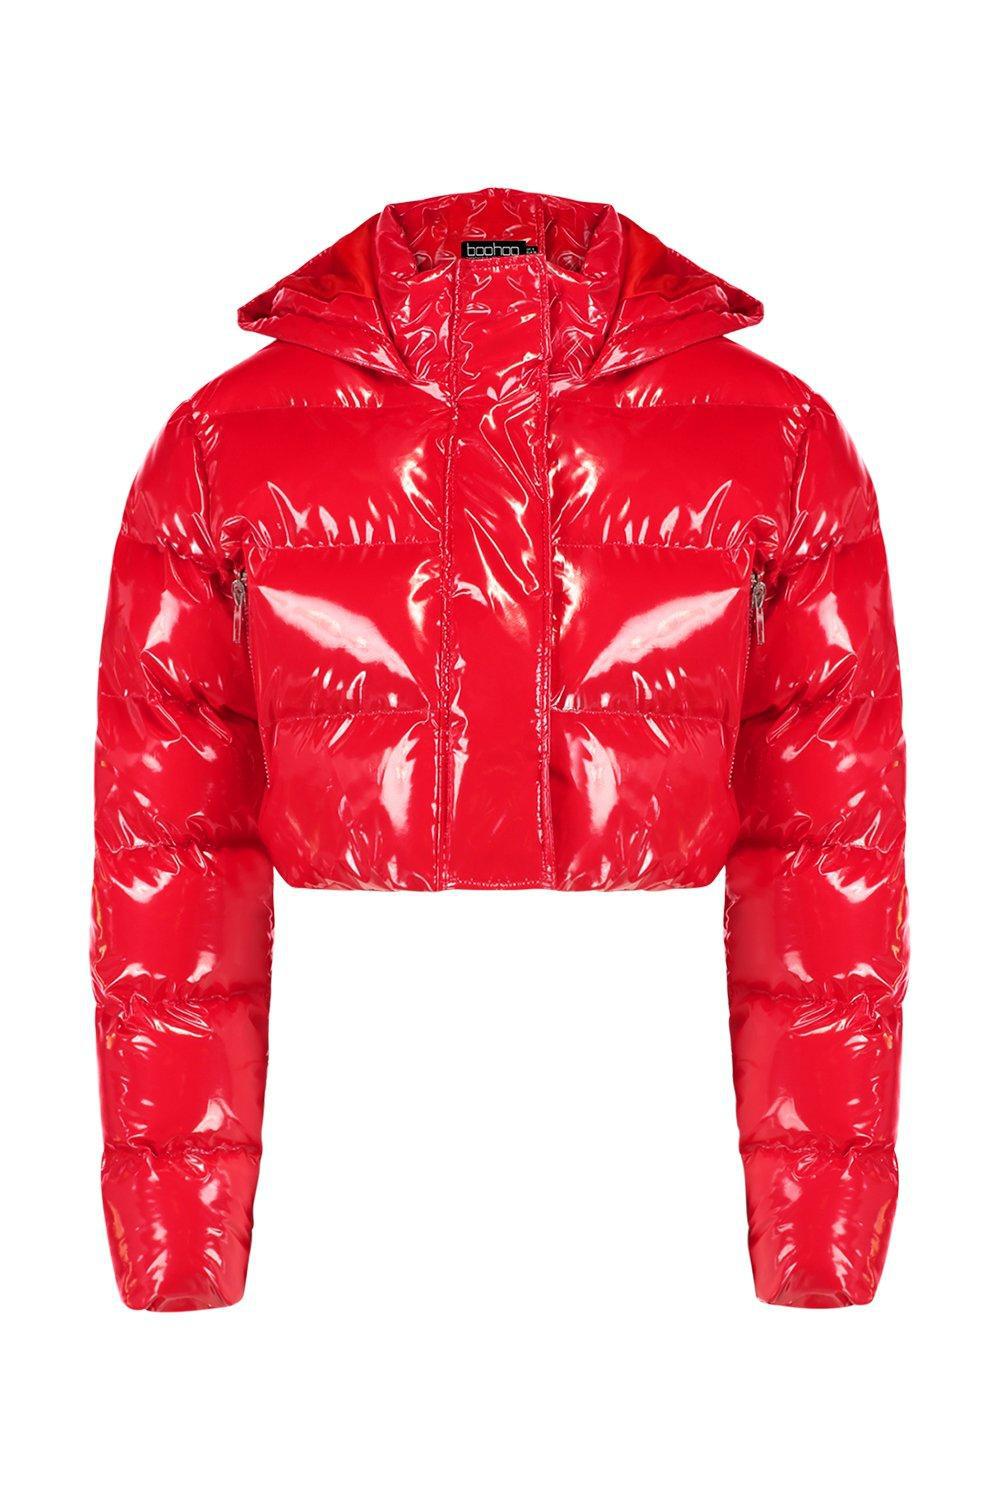 Boohoo Crop Vinyl Puffer Jacket in Red - Lyst